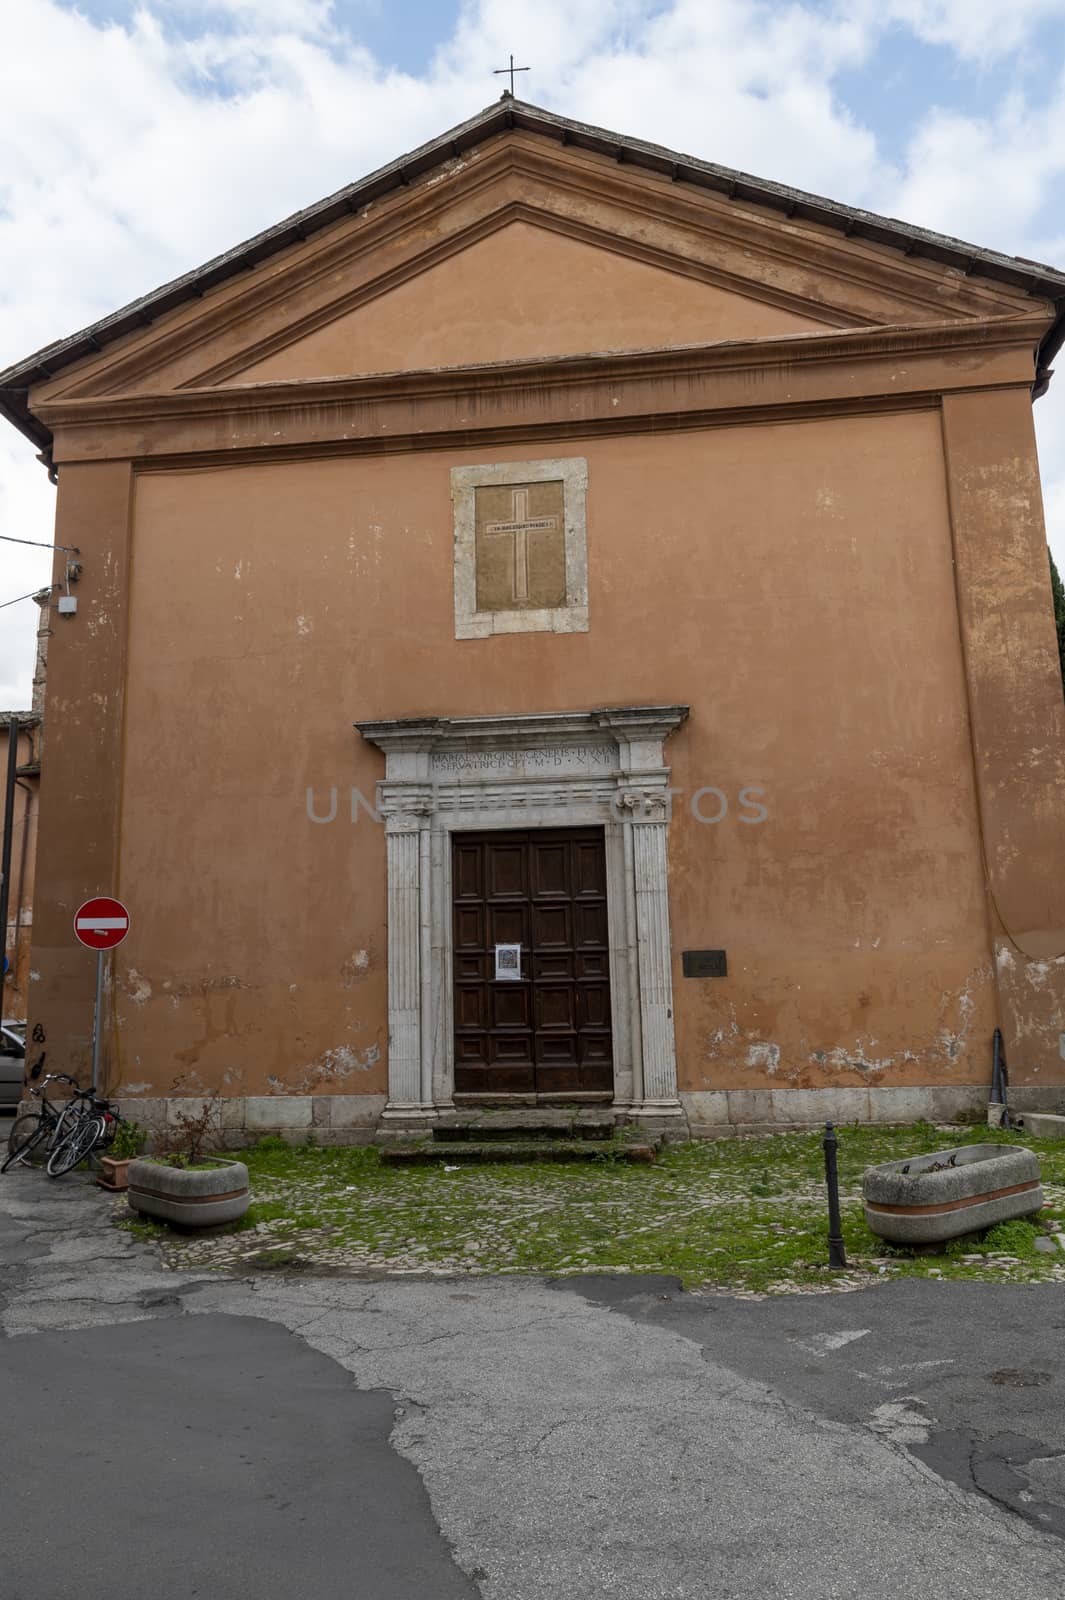 rieti,italy october 02 2020:church of san nicola in the city of rieti